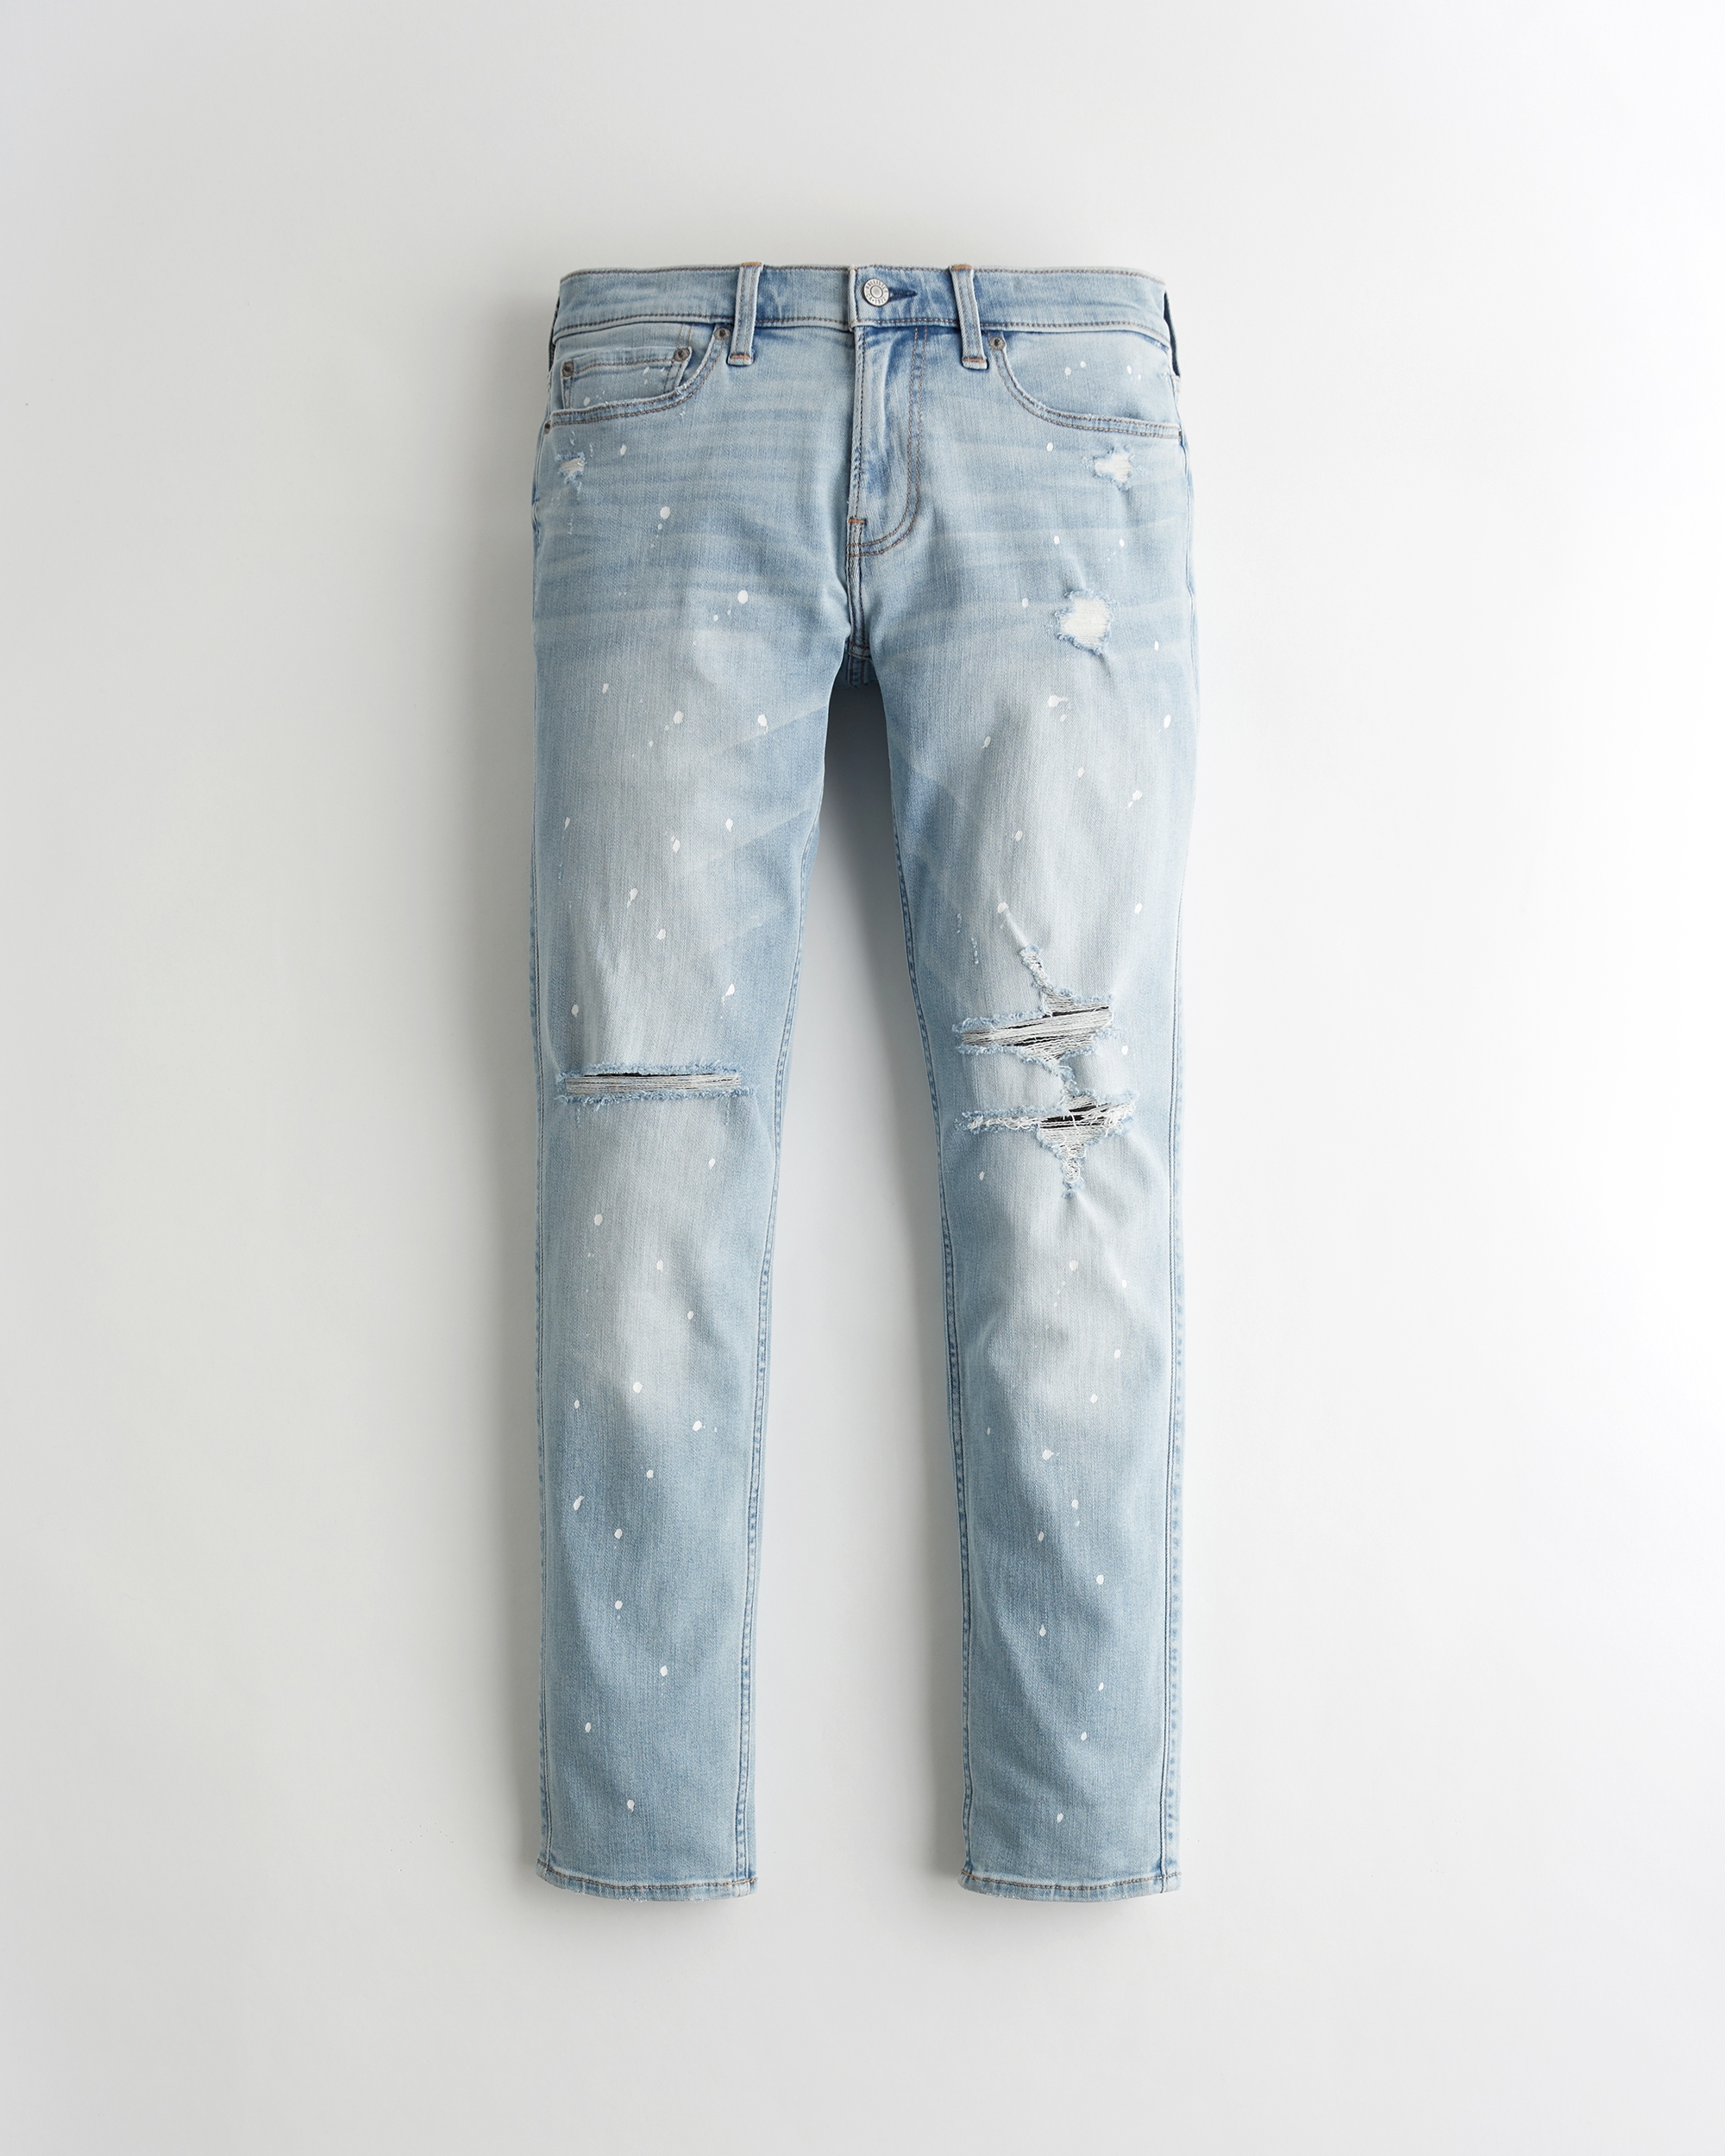 hollister jeans mens sale